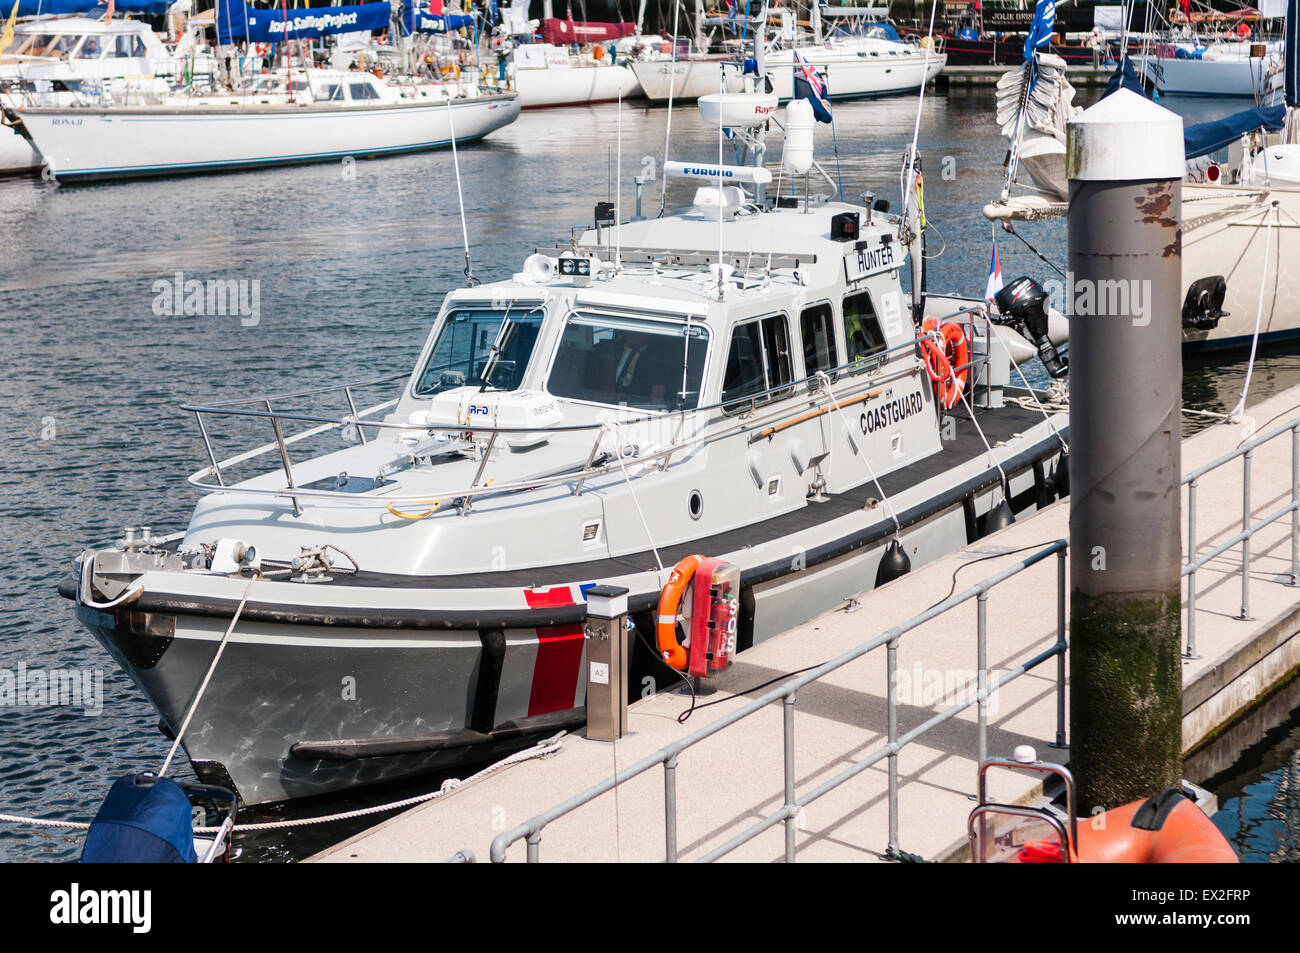 Coast guard patrol craft hi-res stock photography and images - Alamy